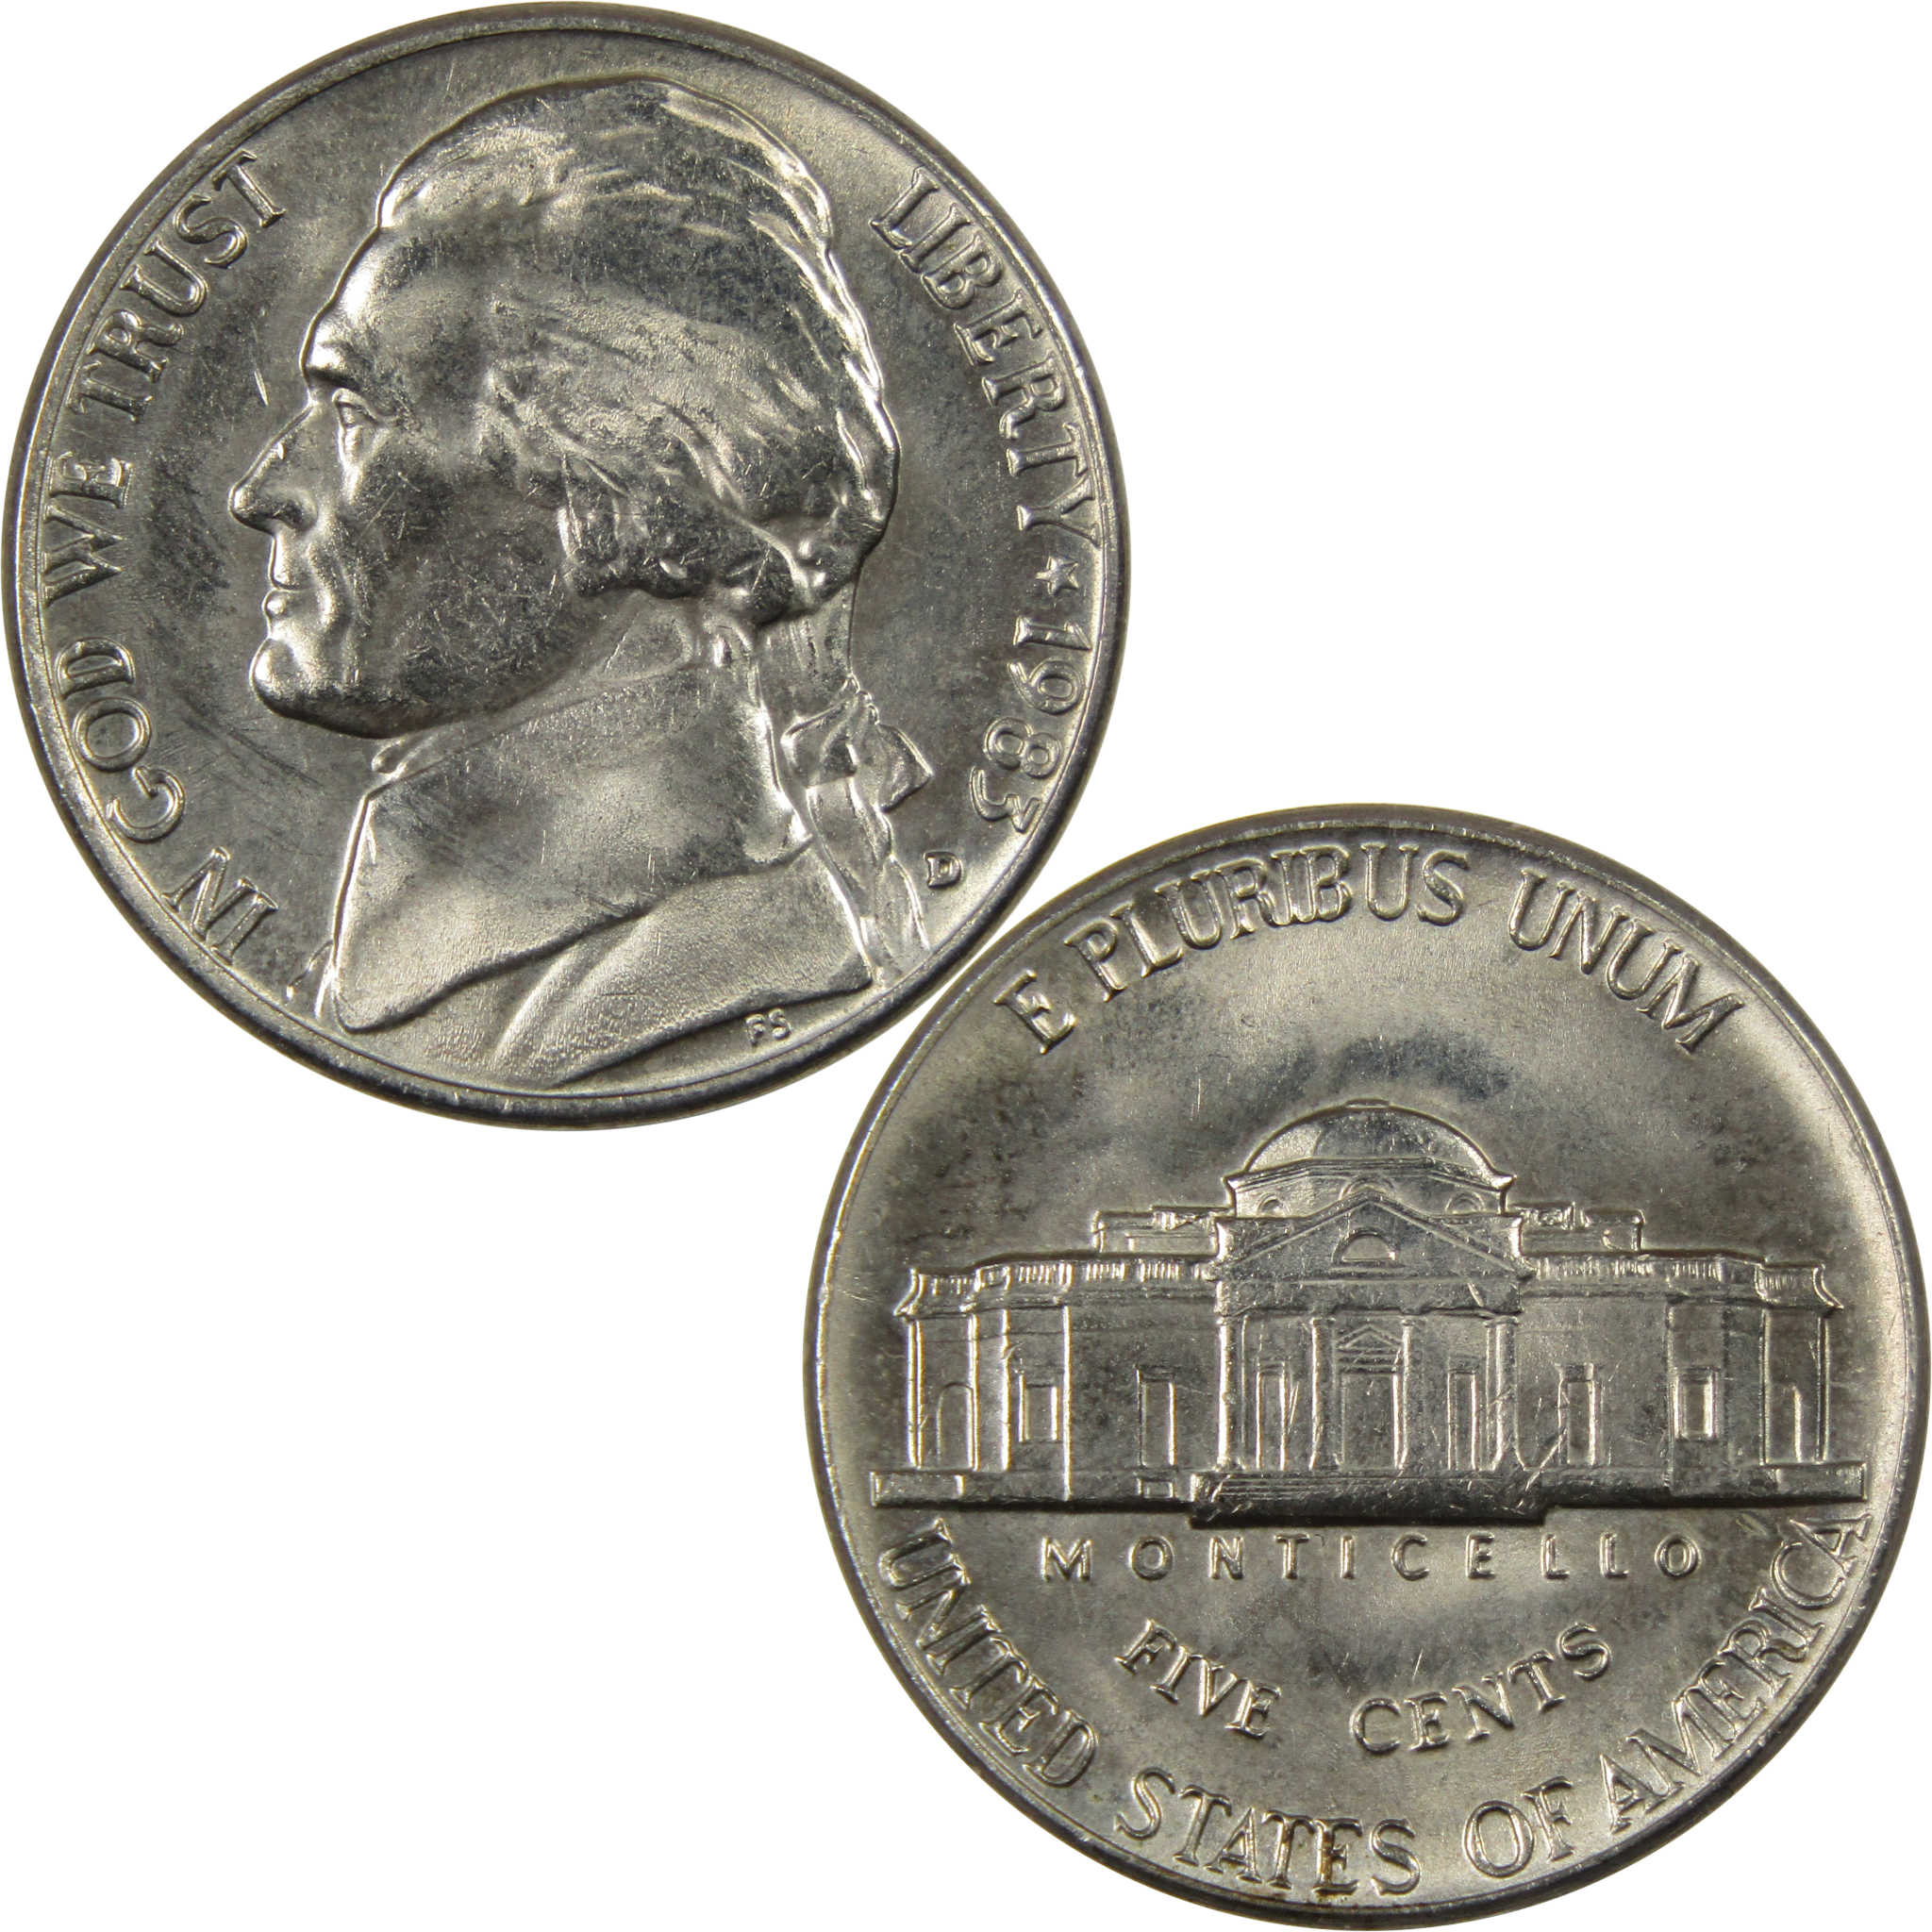 1983 D Jefferson Nickel Uncirculated 5c Coin